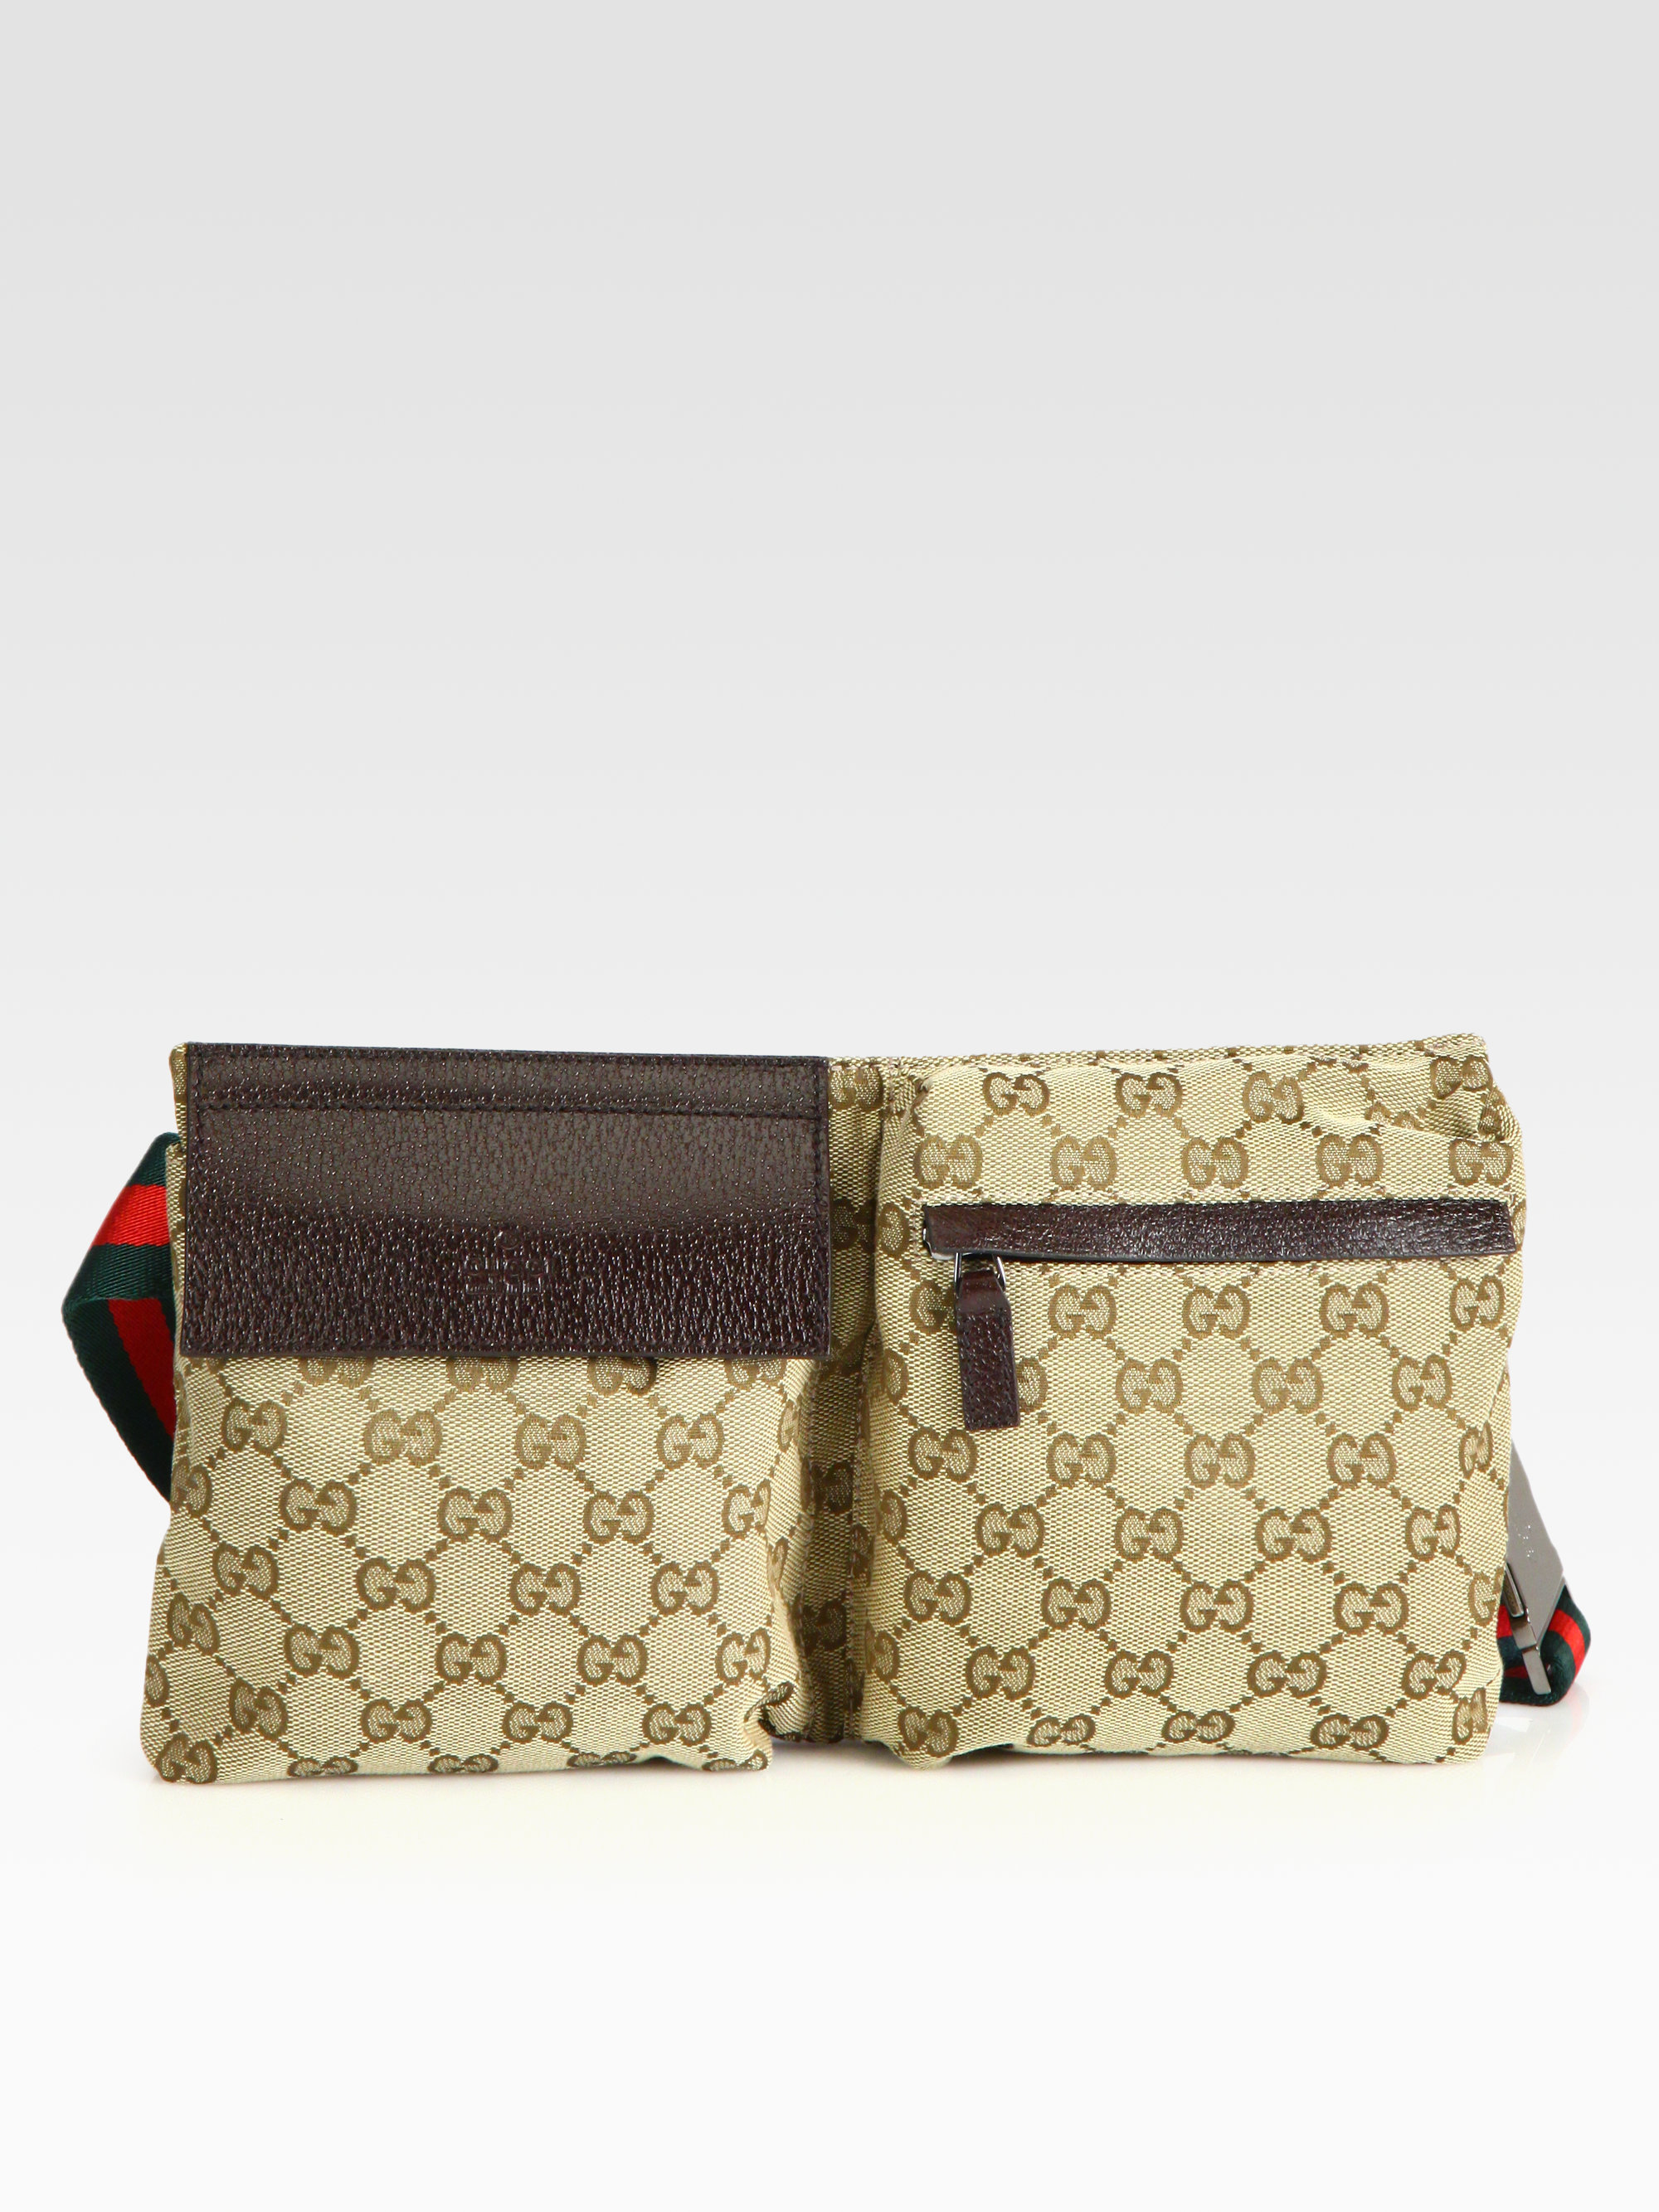 Lyst - Gucci Gg Canvas Belt Bag in Natural for Men